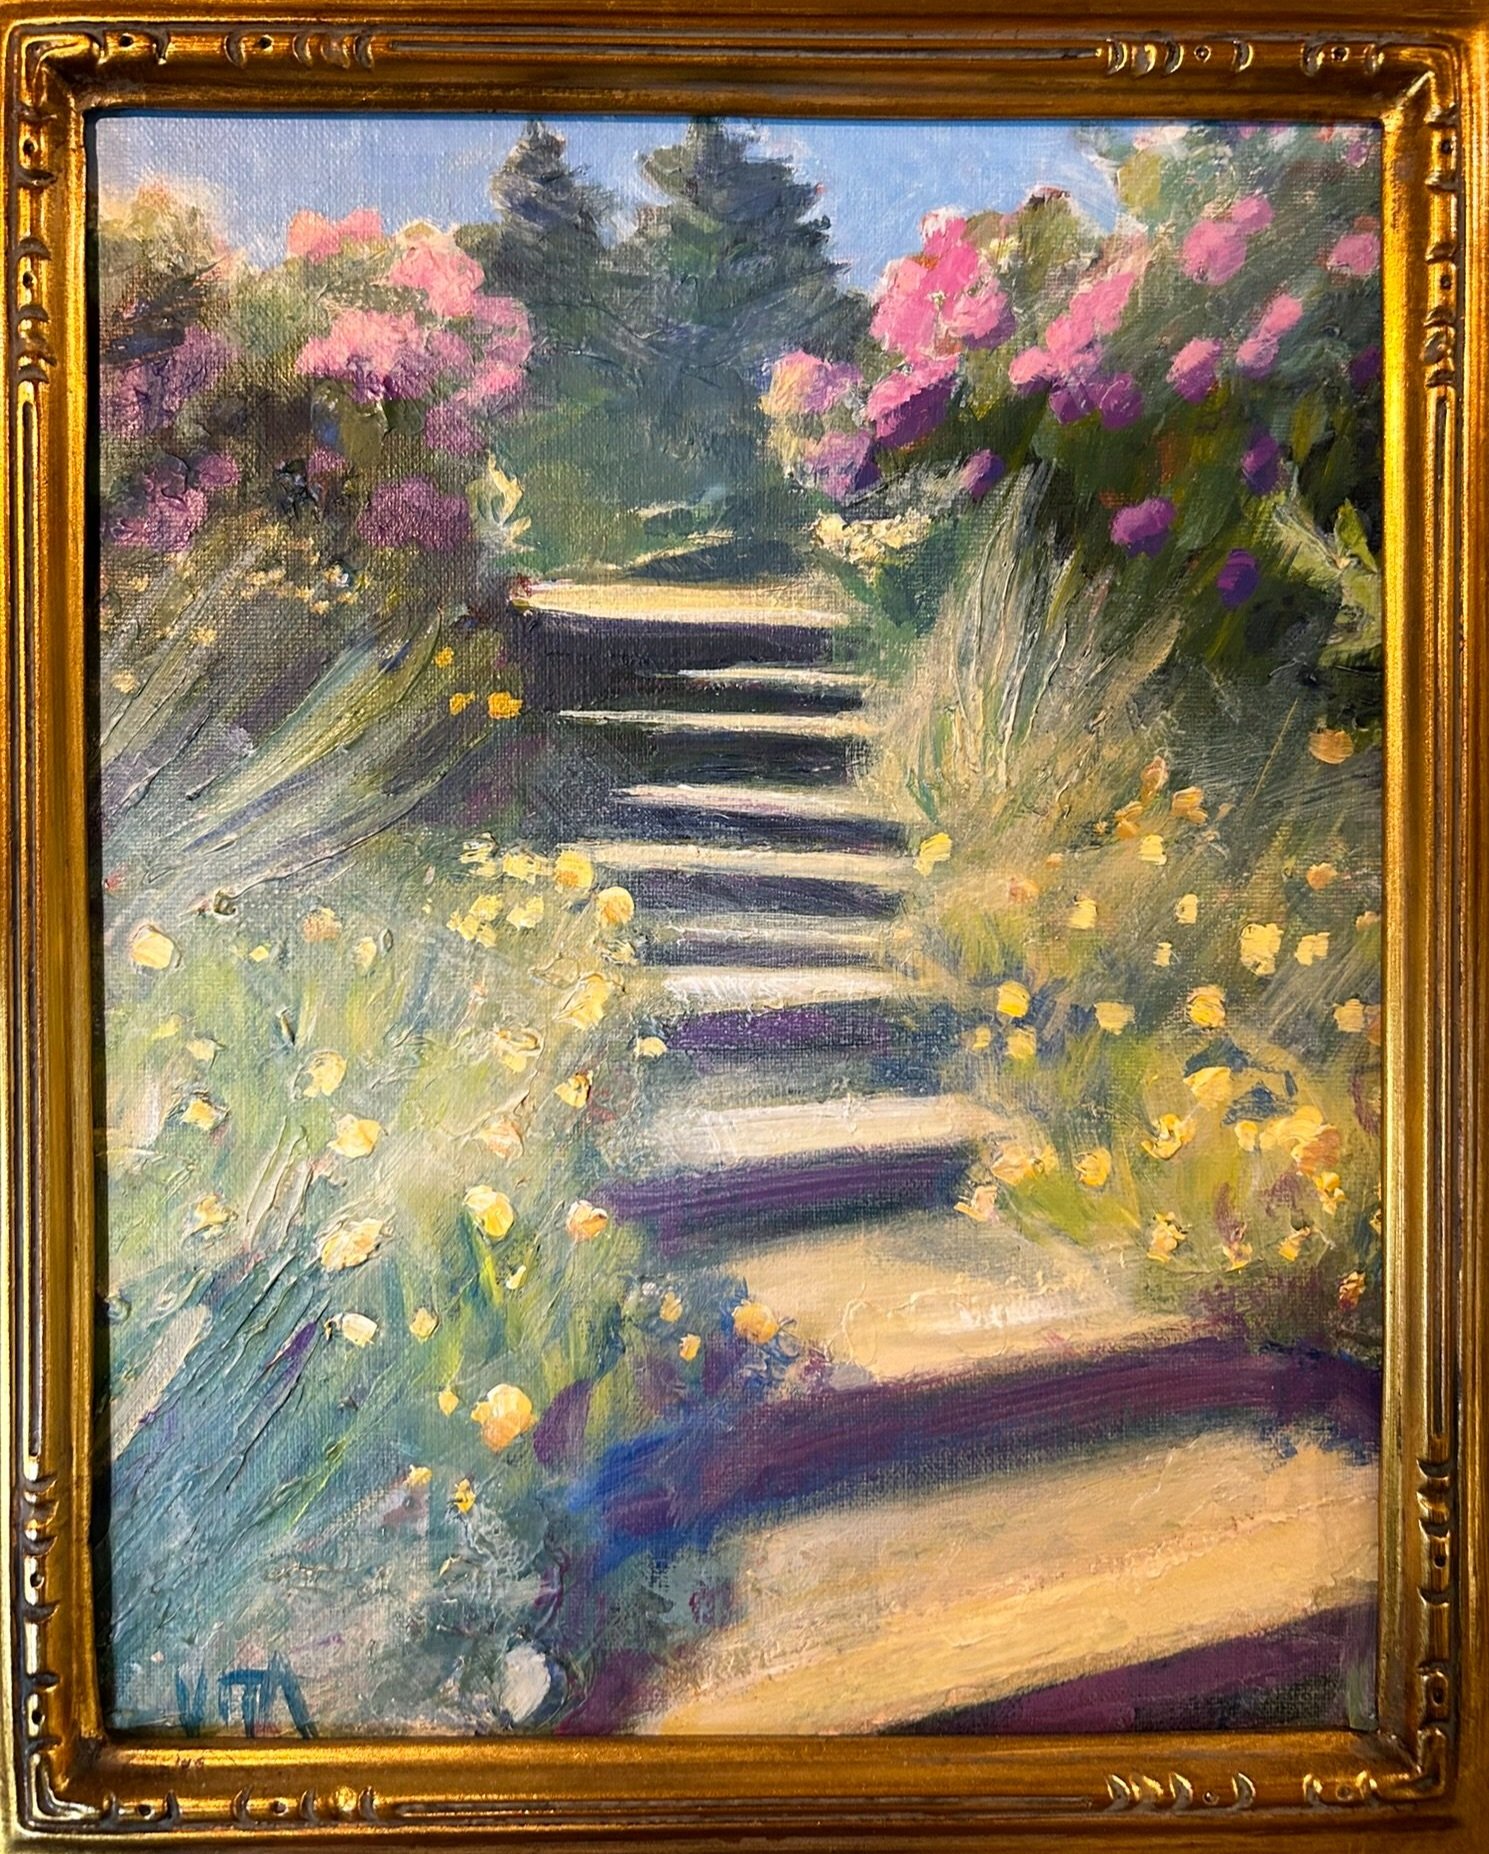 SOLD, The Garden Steps, Acrylic on Canvas, Copyright 2020 Hirschten